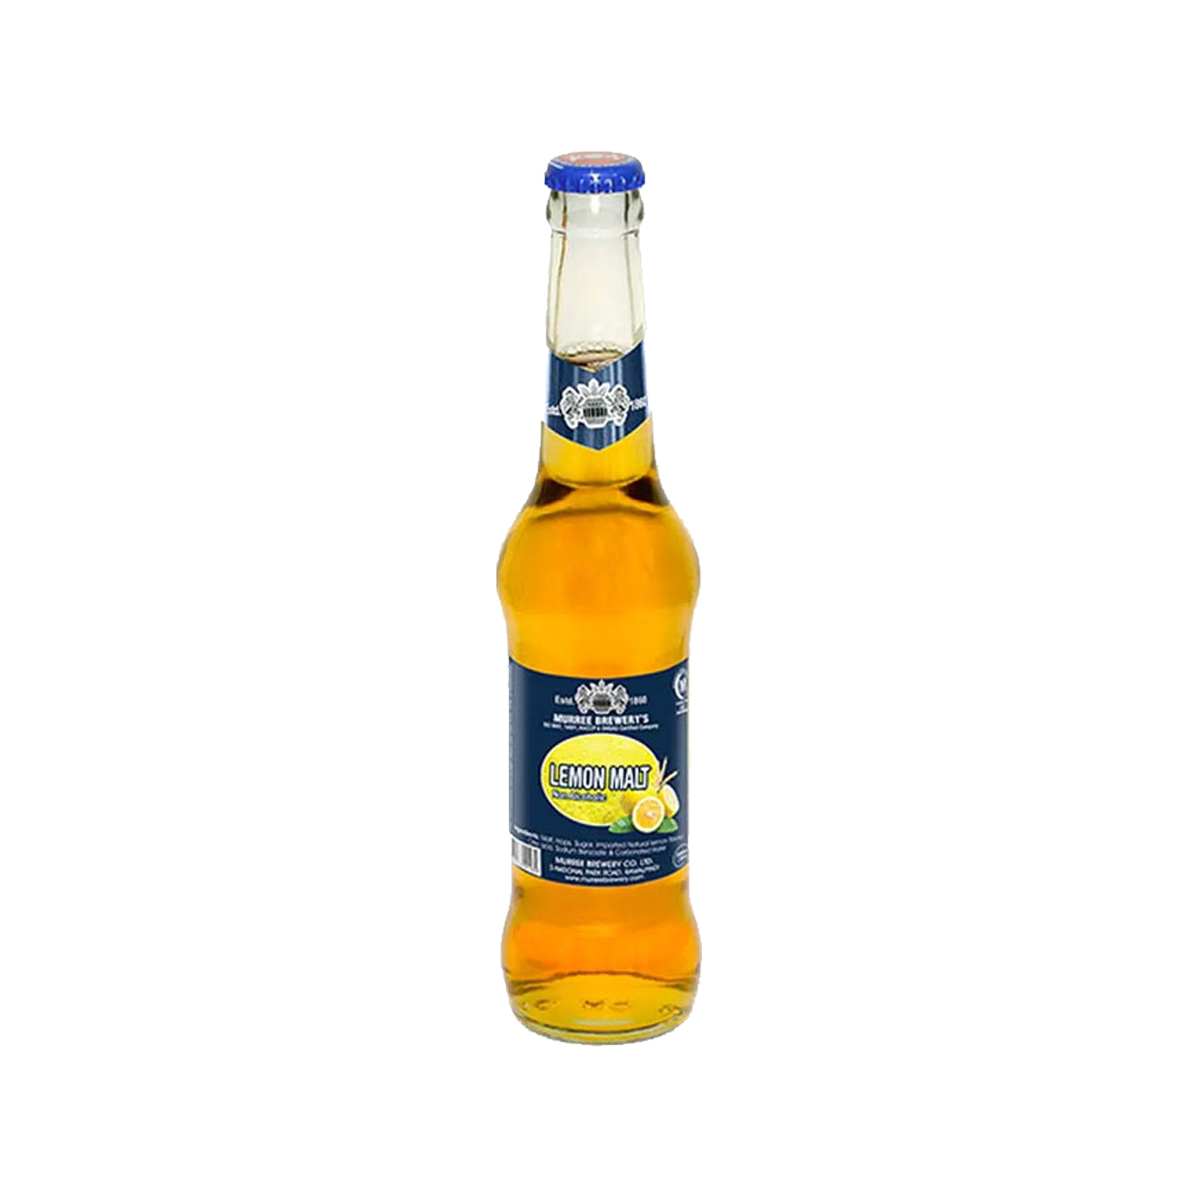 Murree Brewery Malt NR Lemon Malt 300ml